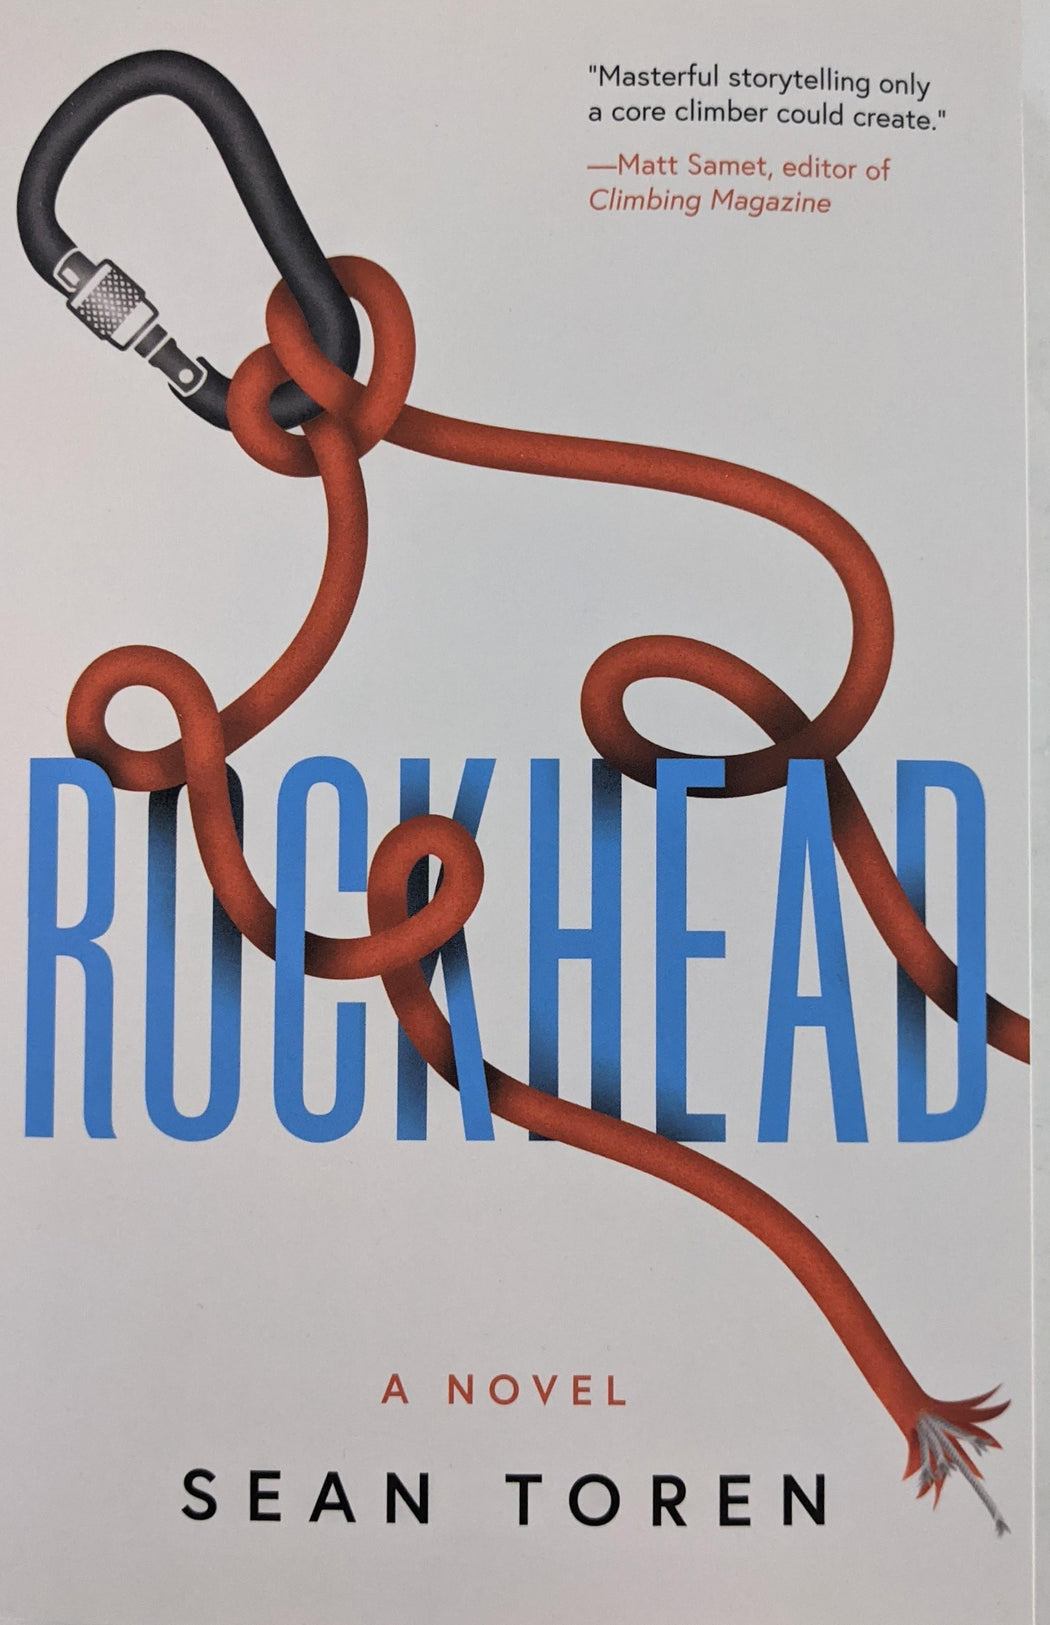 Rockhead